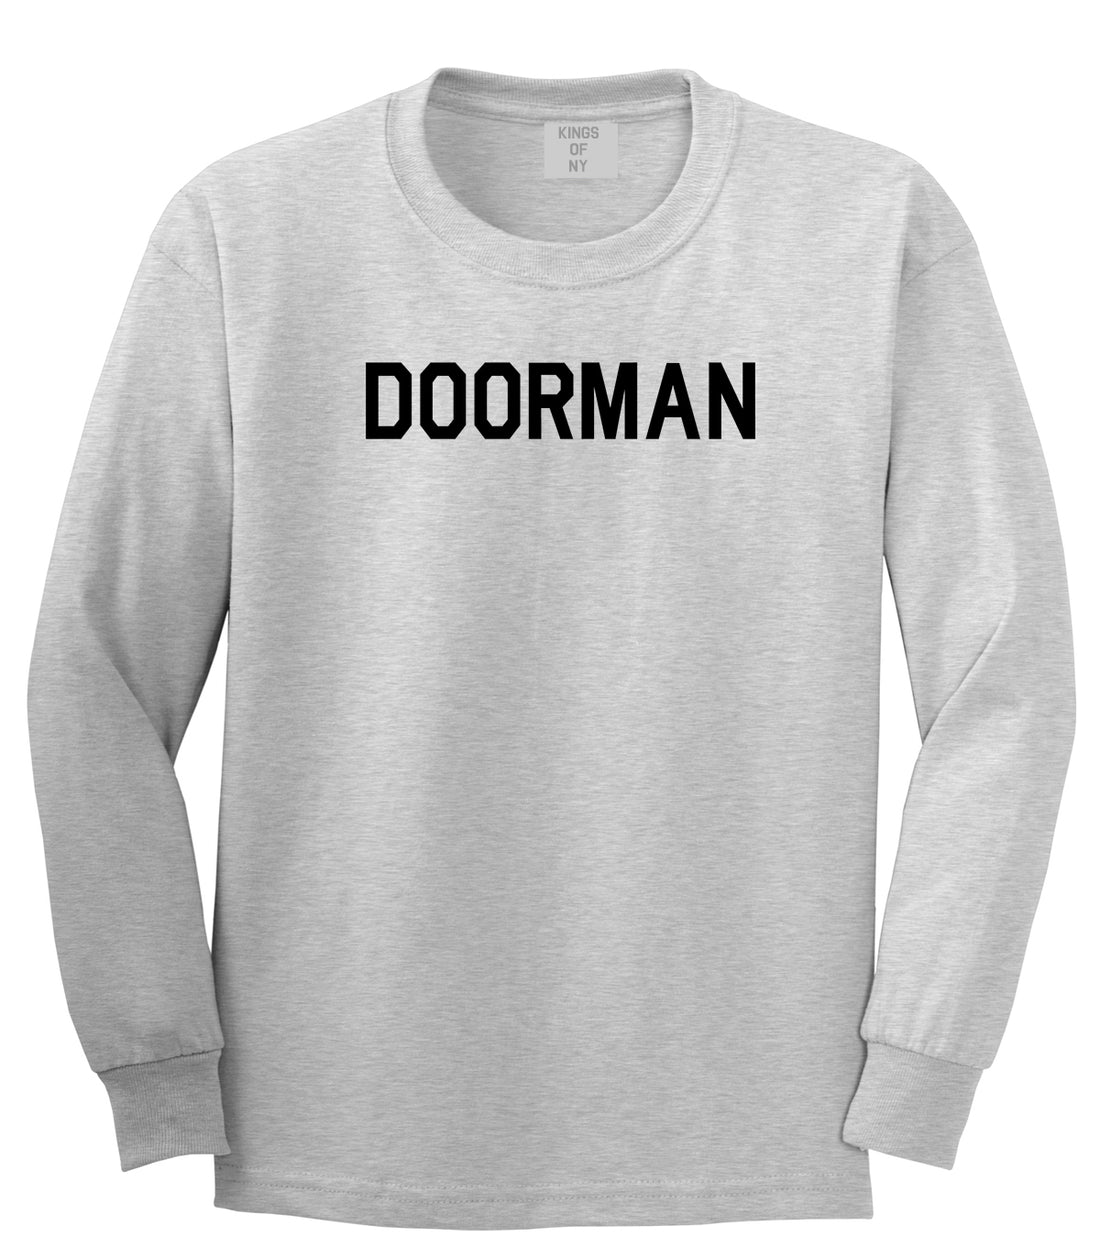 Doorman Mens Grey Long Sleeve T-Shirt by Kings Of NY